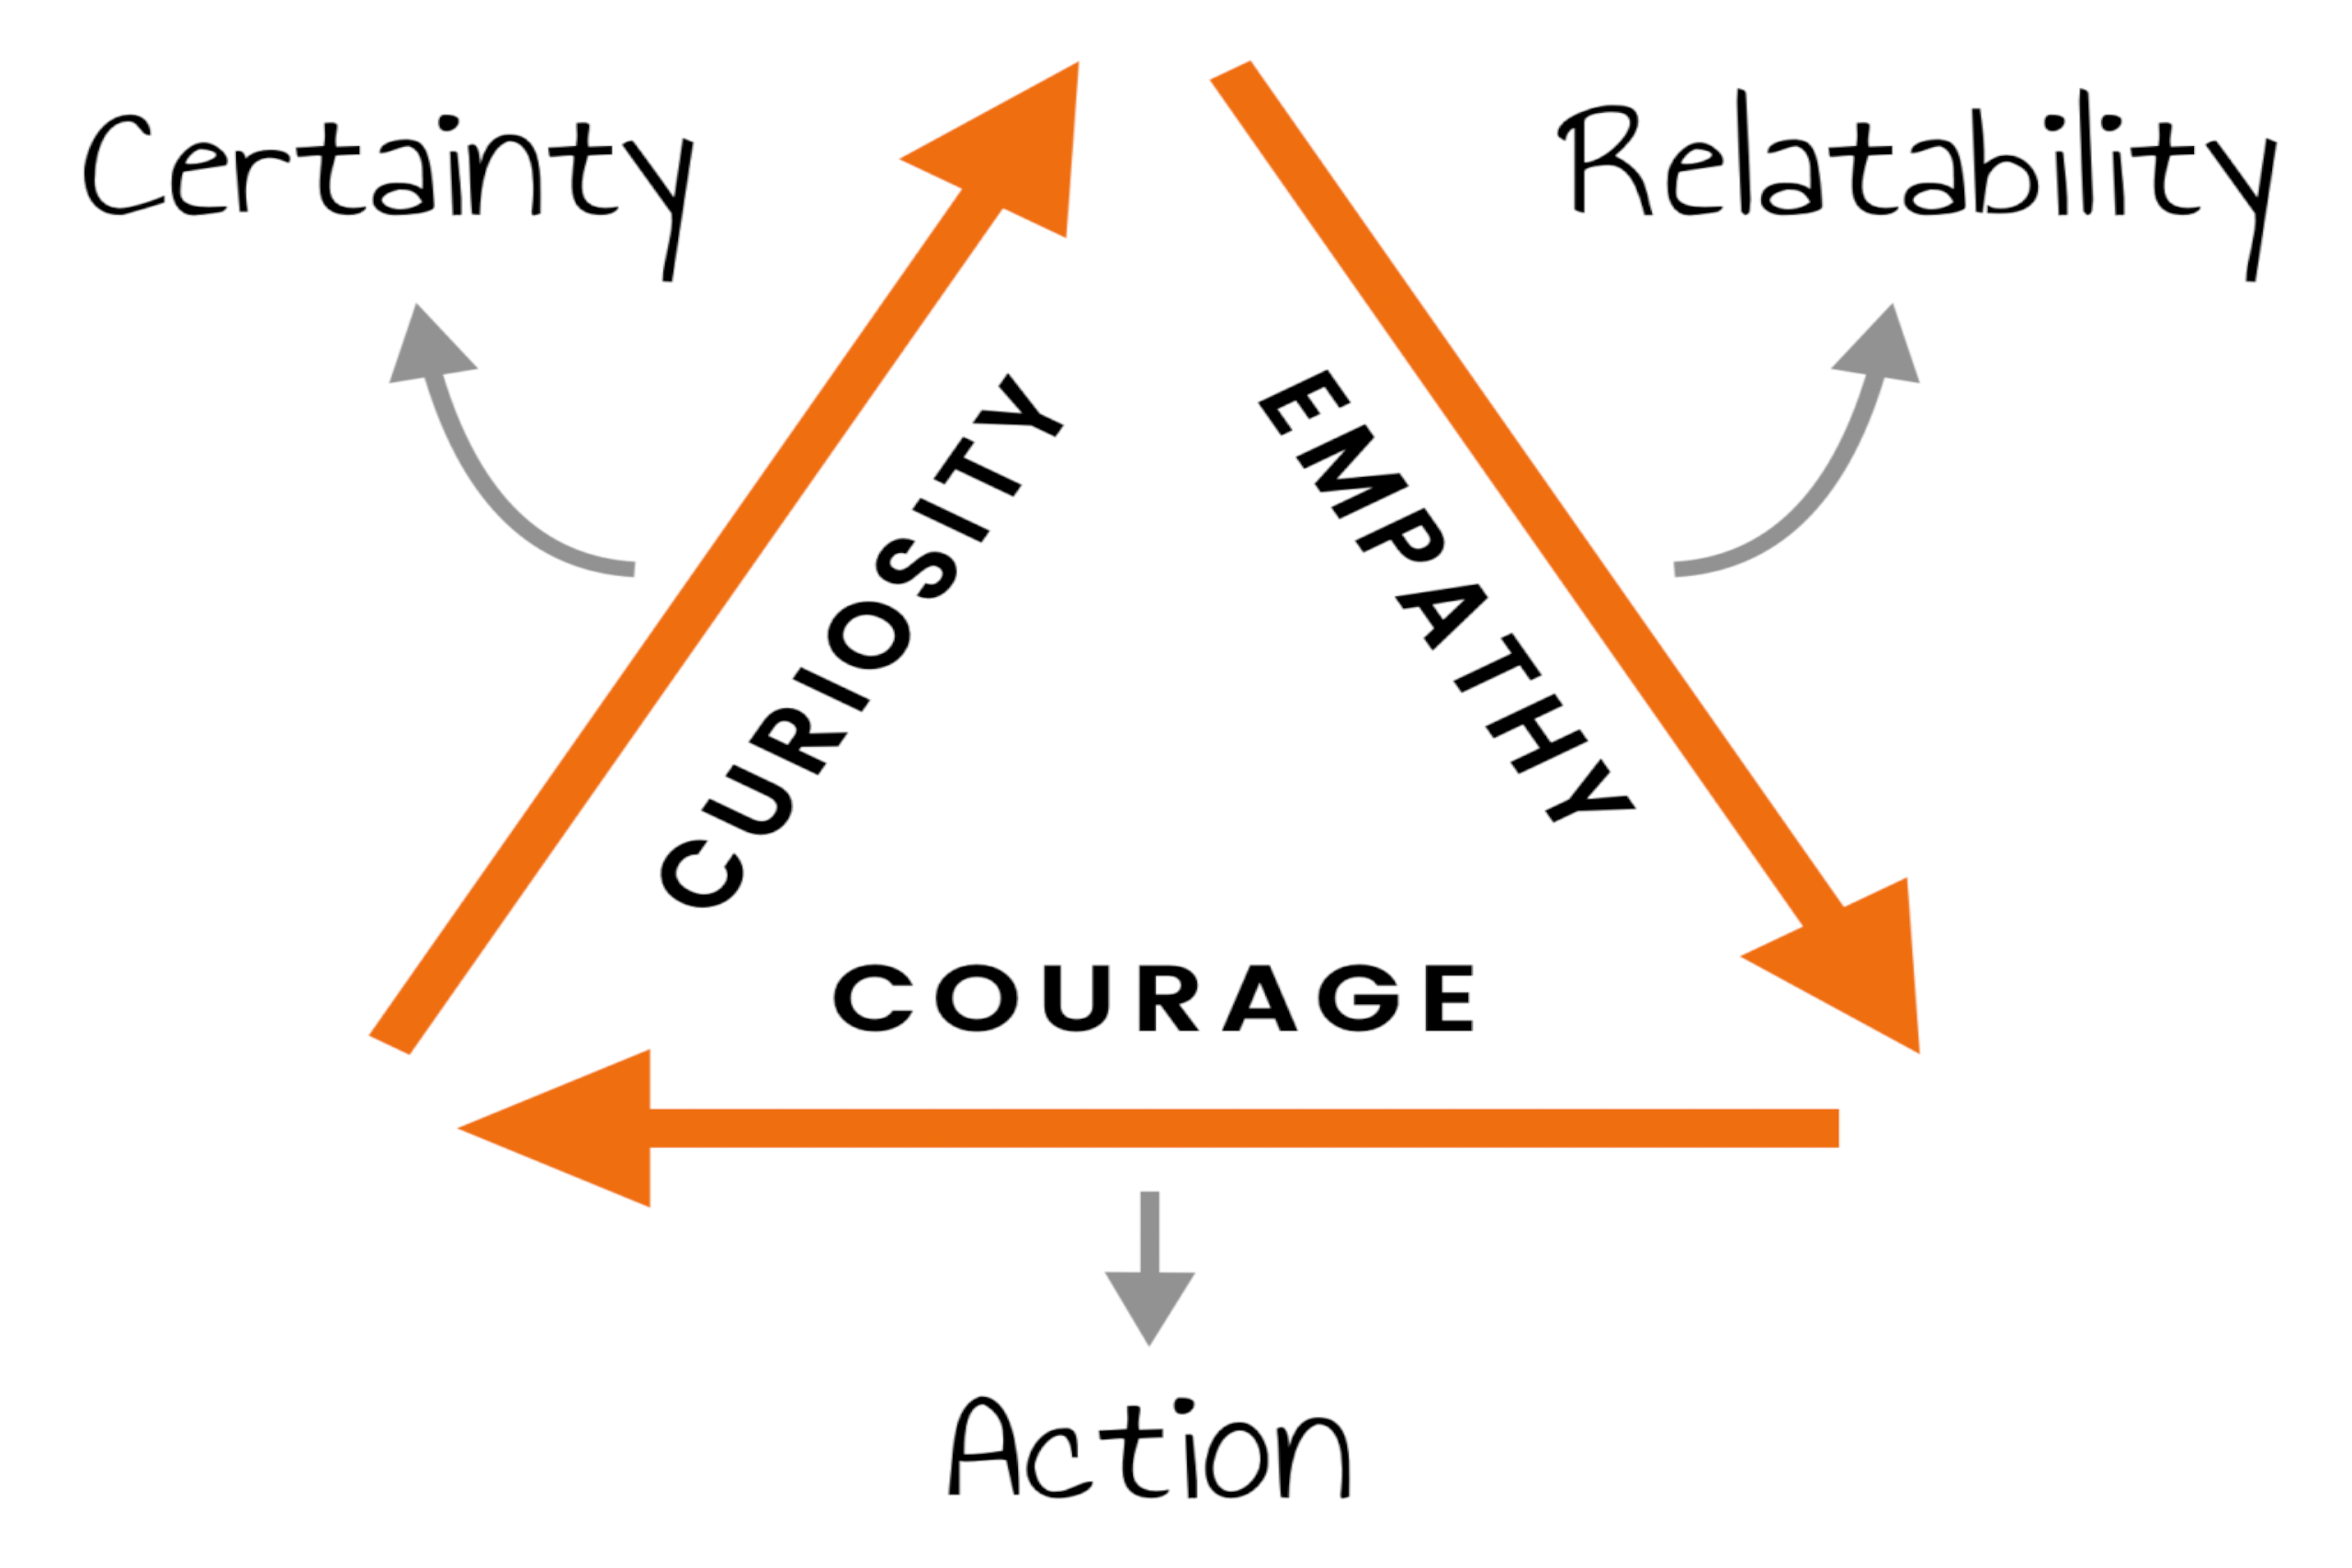 curiosity-empathy-courage-2560x1707-1 (1)-min (1)-min-min (1)